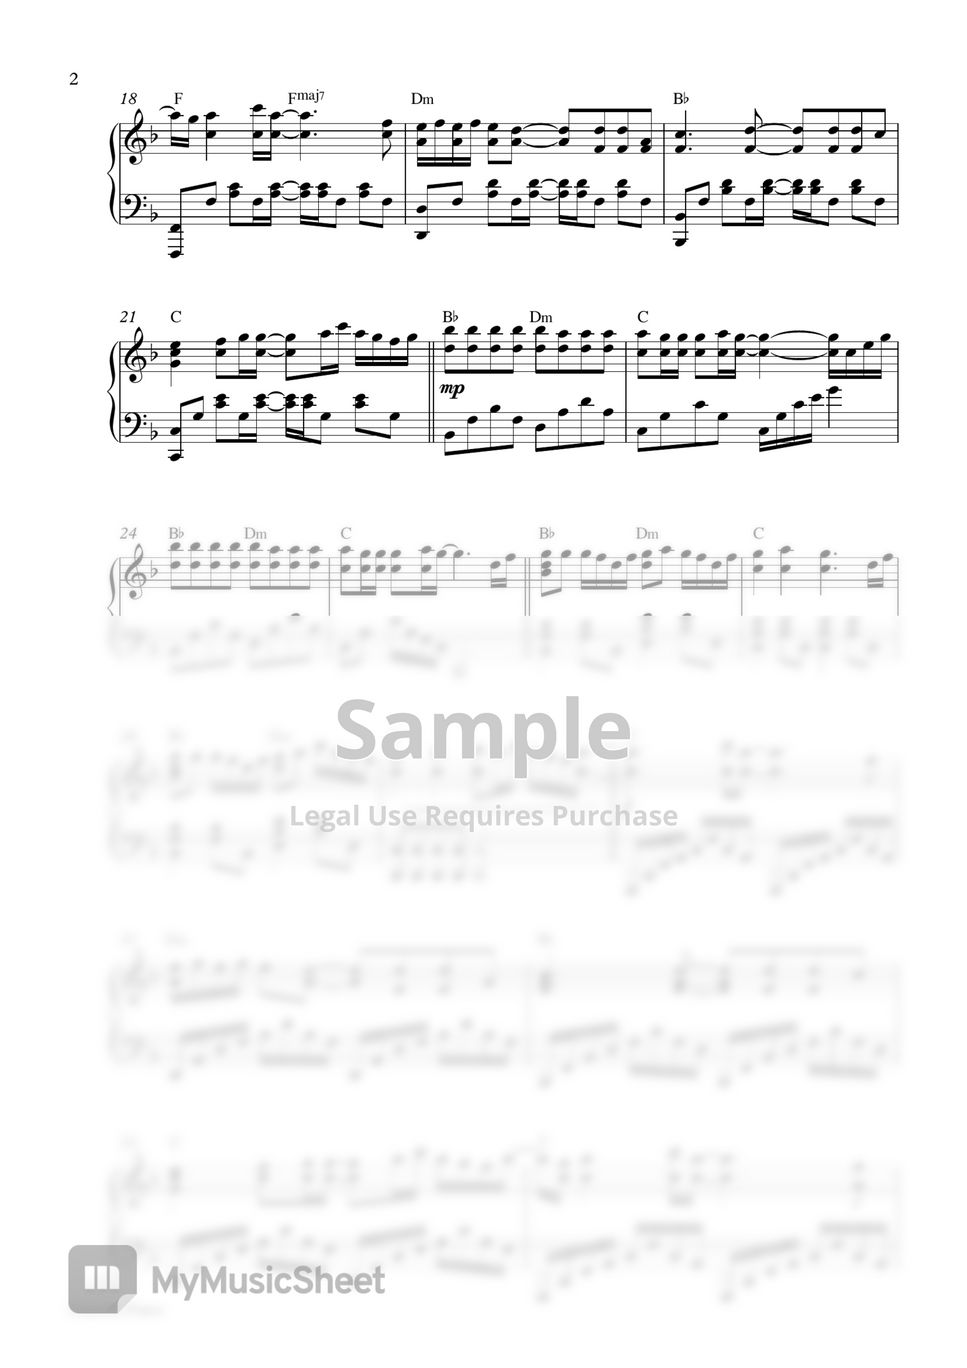 BTS JIN - Epiphany (Piano Sheet) by Pianella Piano